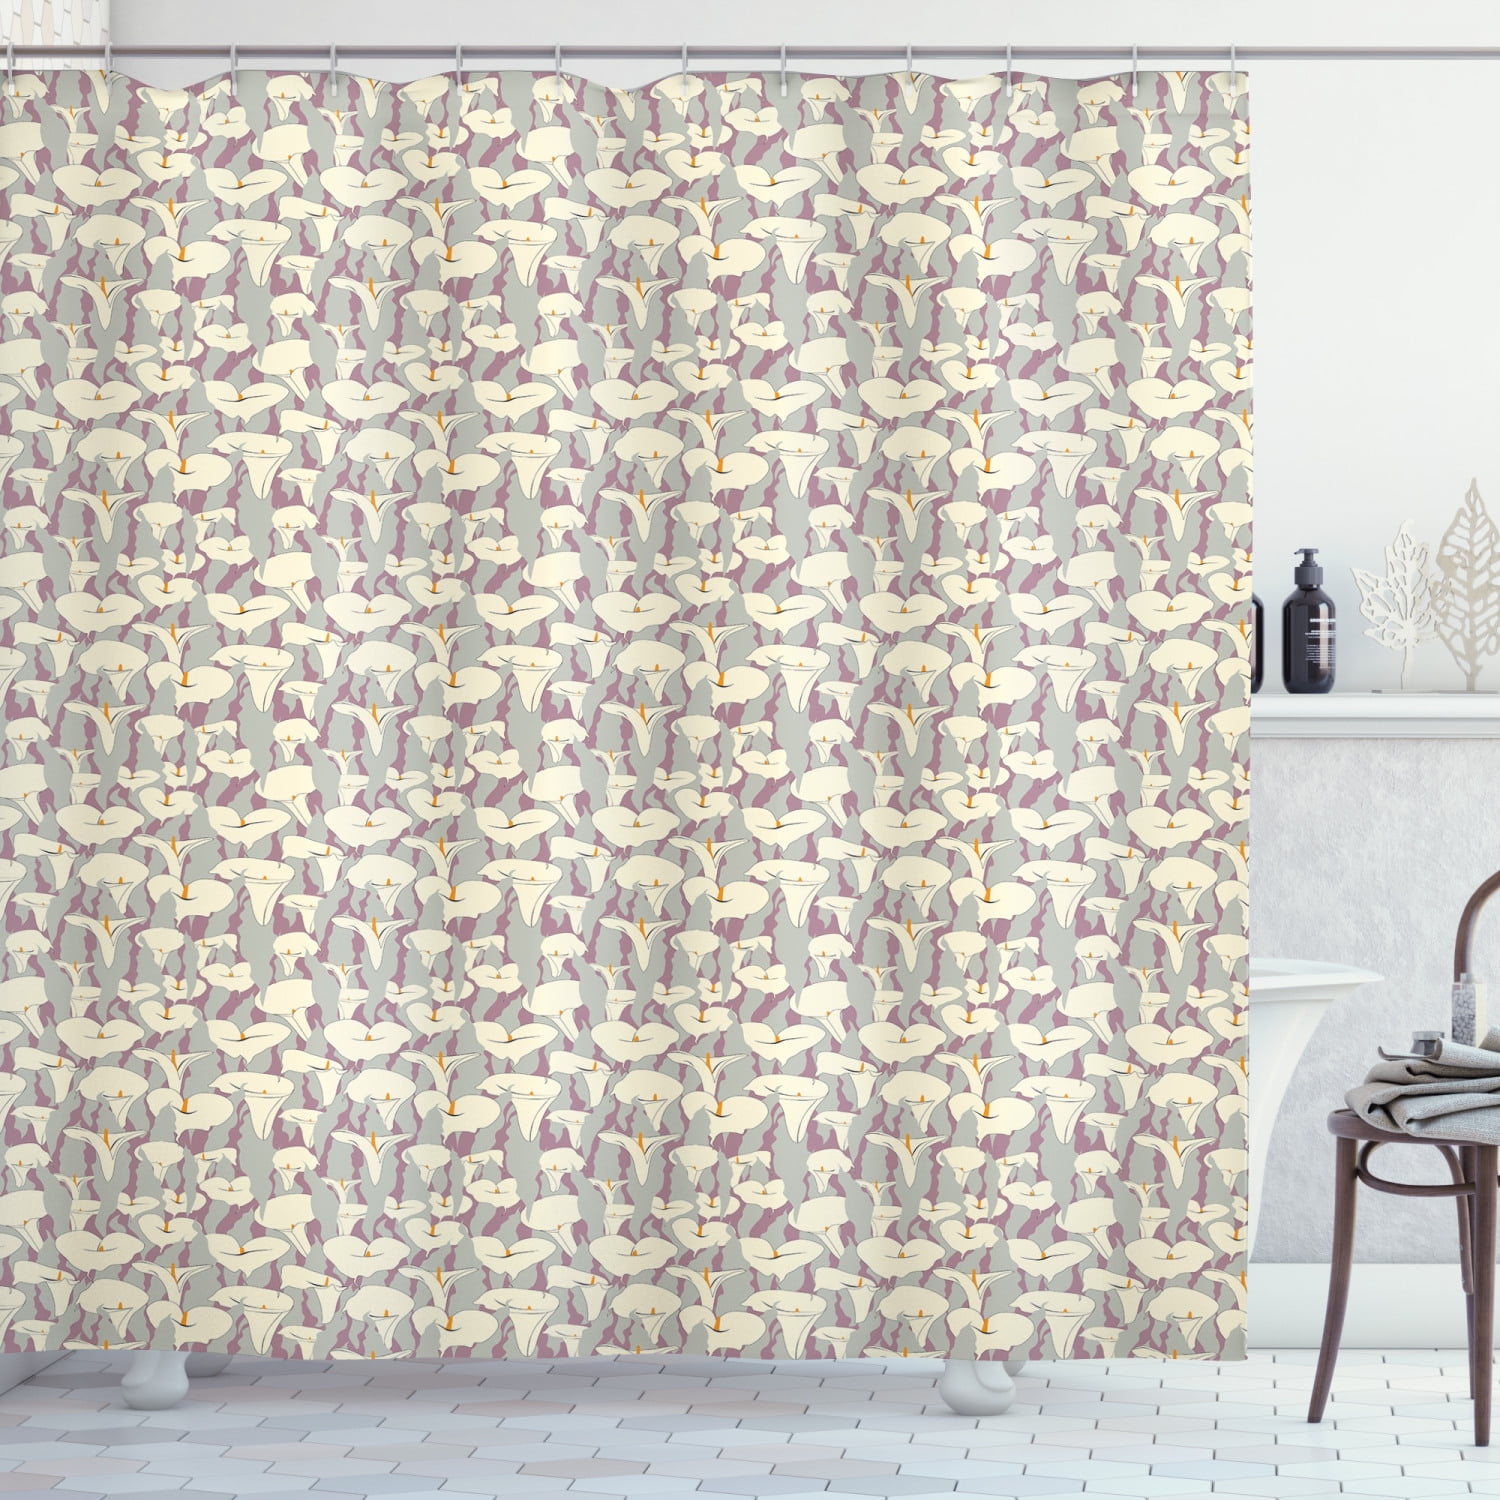 72x72'' Cala Lilly on Black Bathroom Shower Curtain Waterproof Fabric 12 Hooks